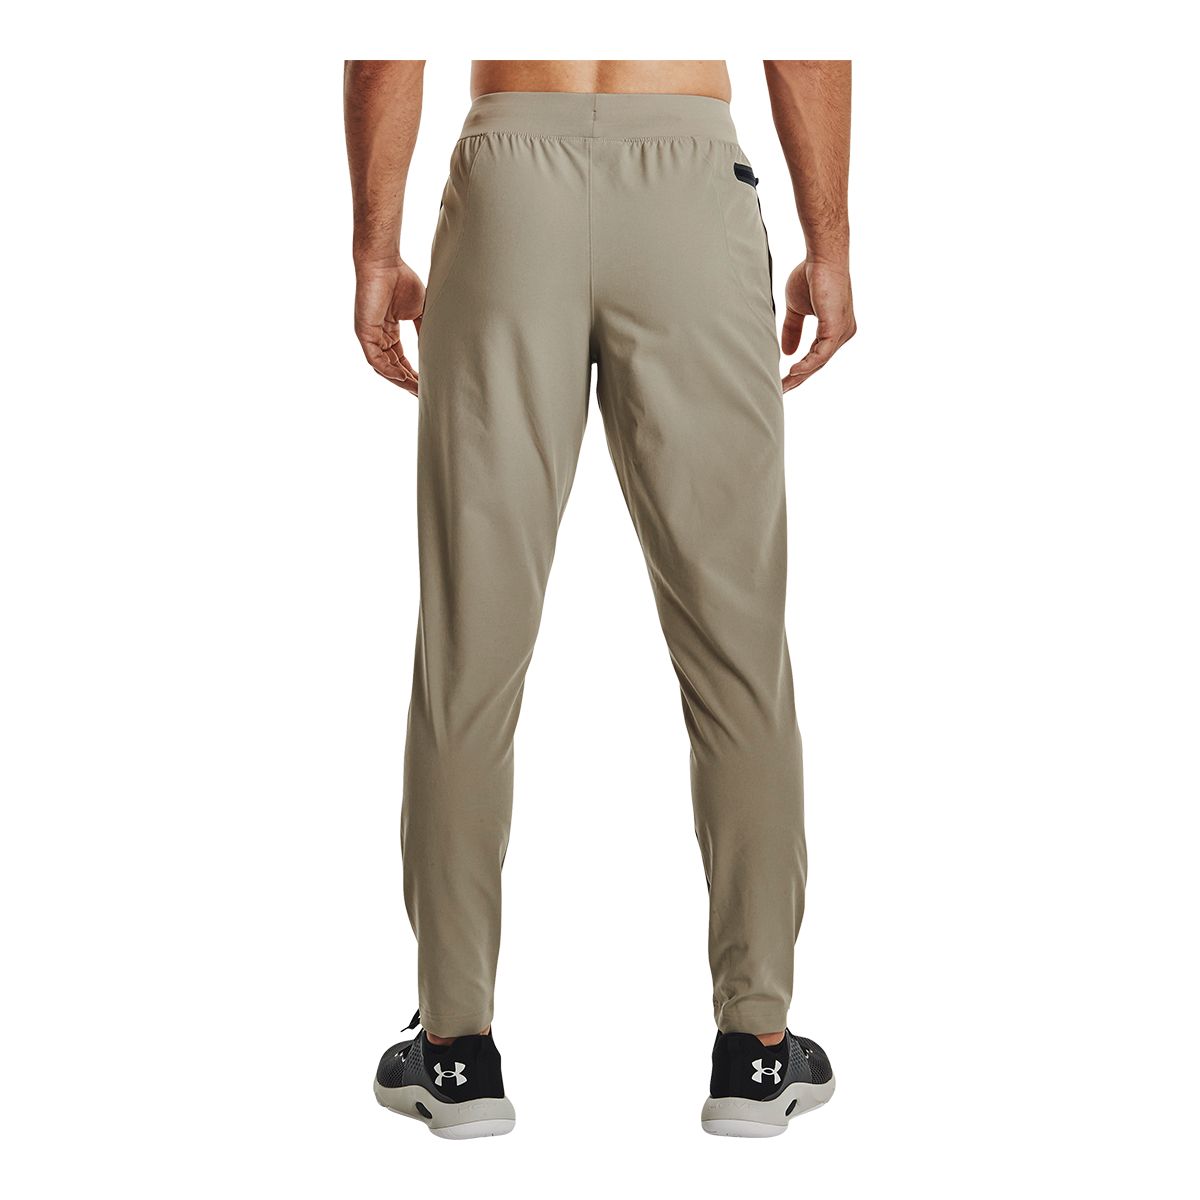 Under Armour Mens UA Stretch Woven Pants Sweatpants 1366215 - New 